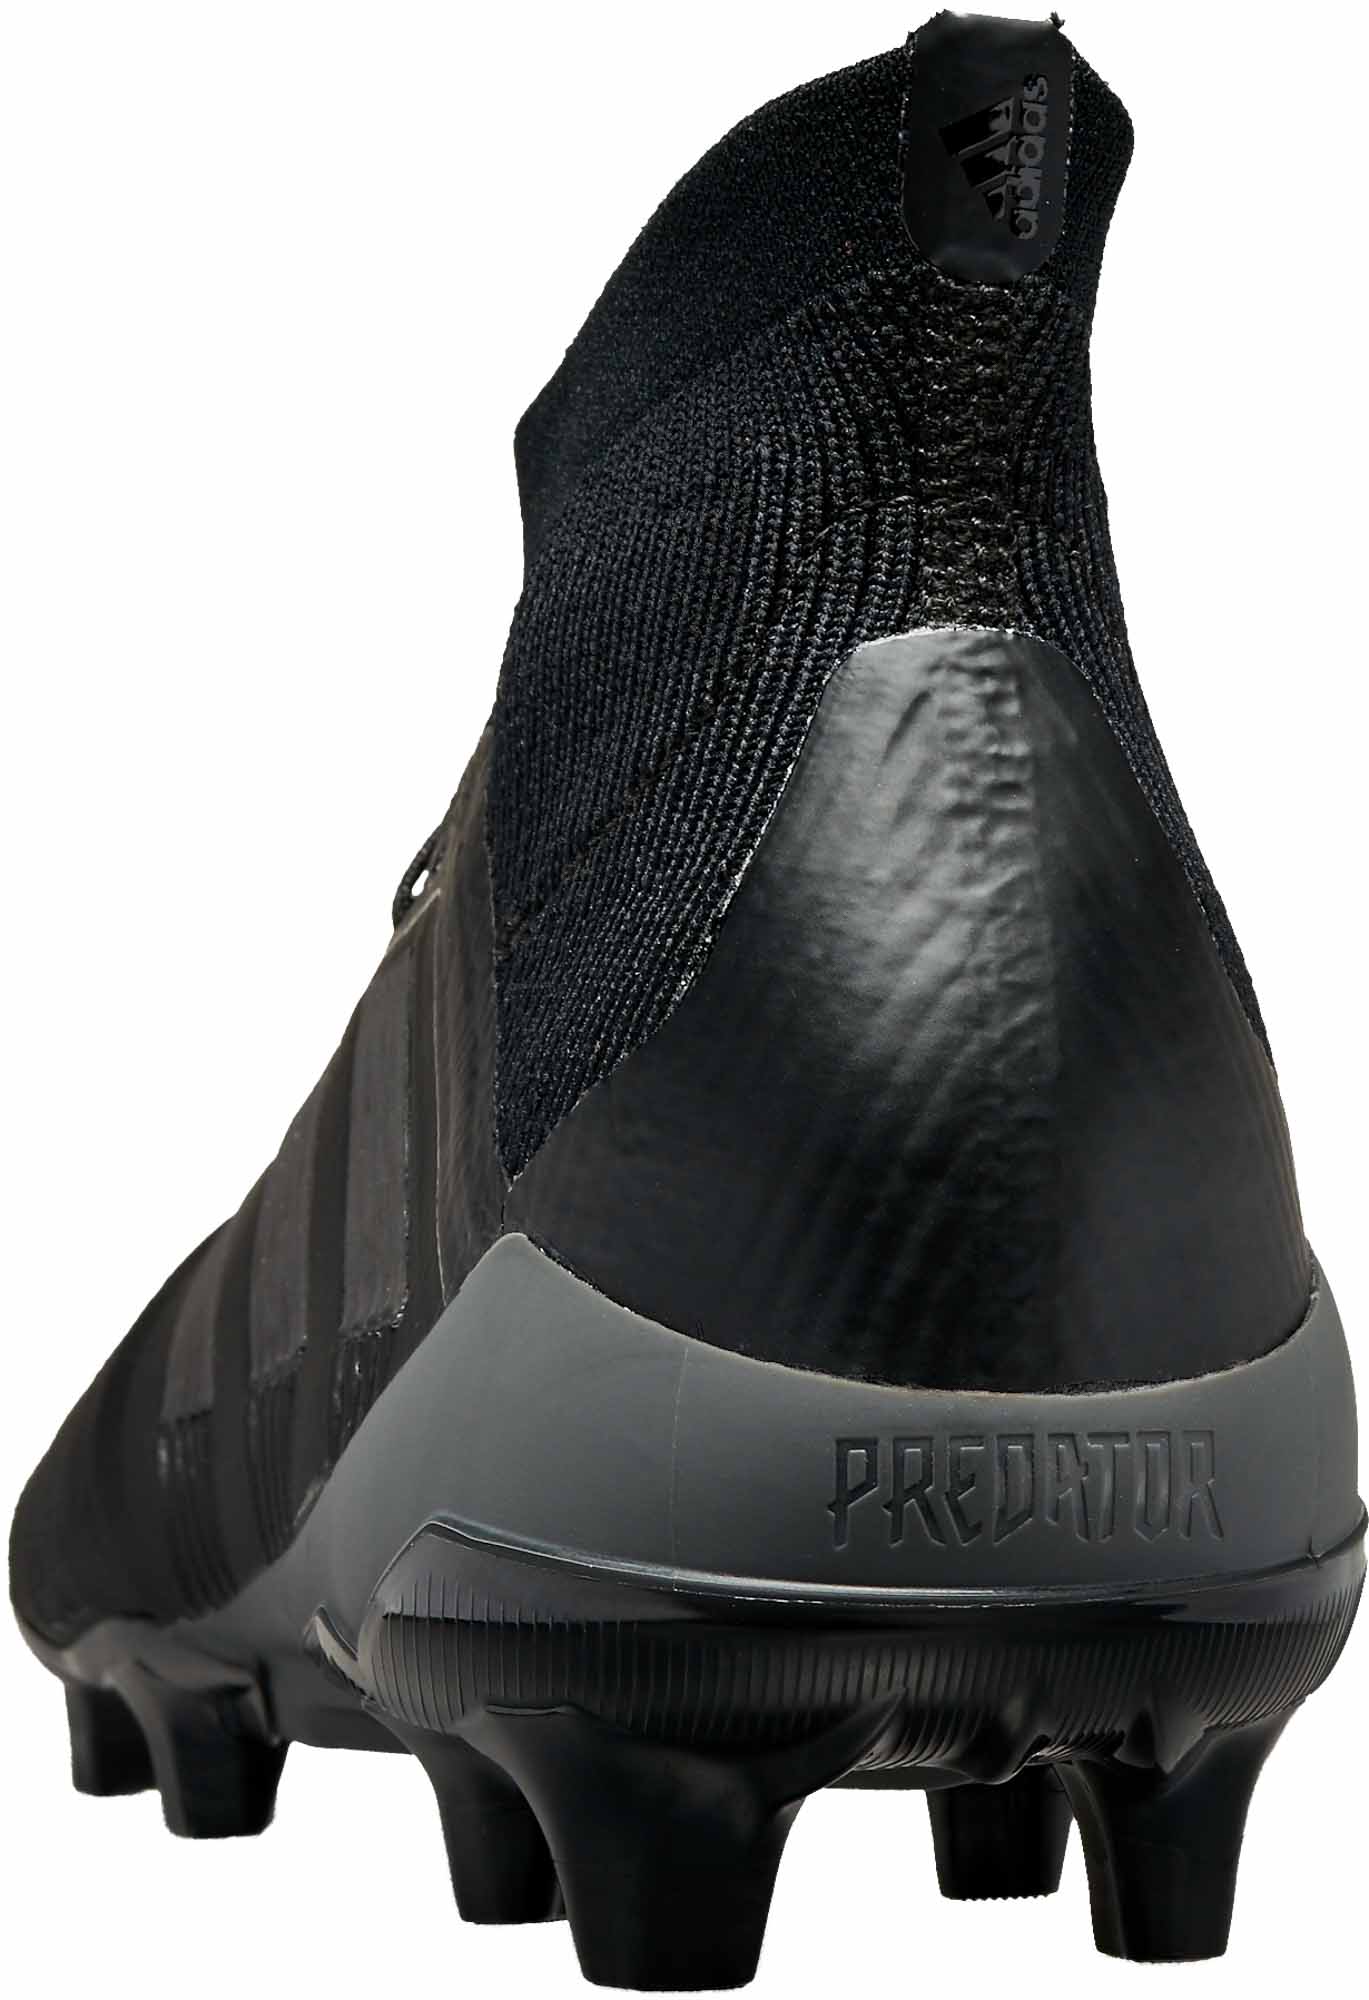 adidas predator 18.1 all black